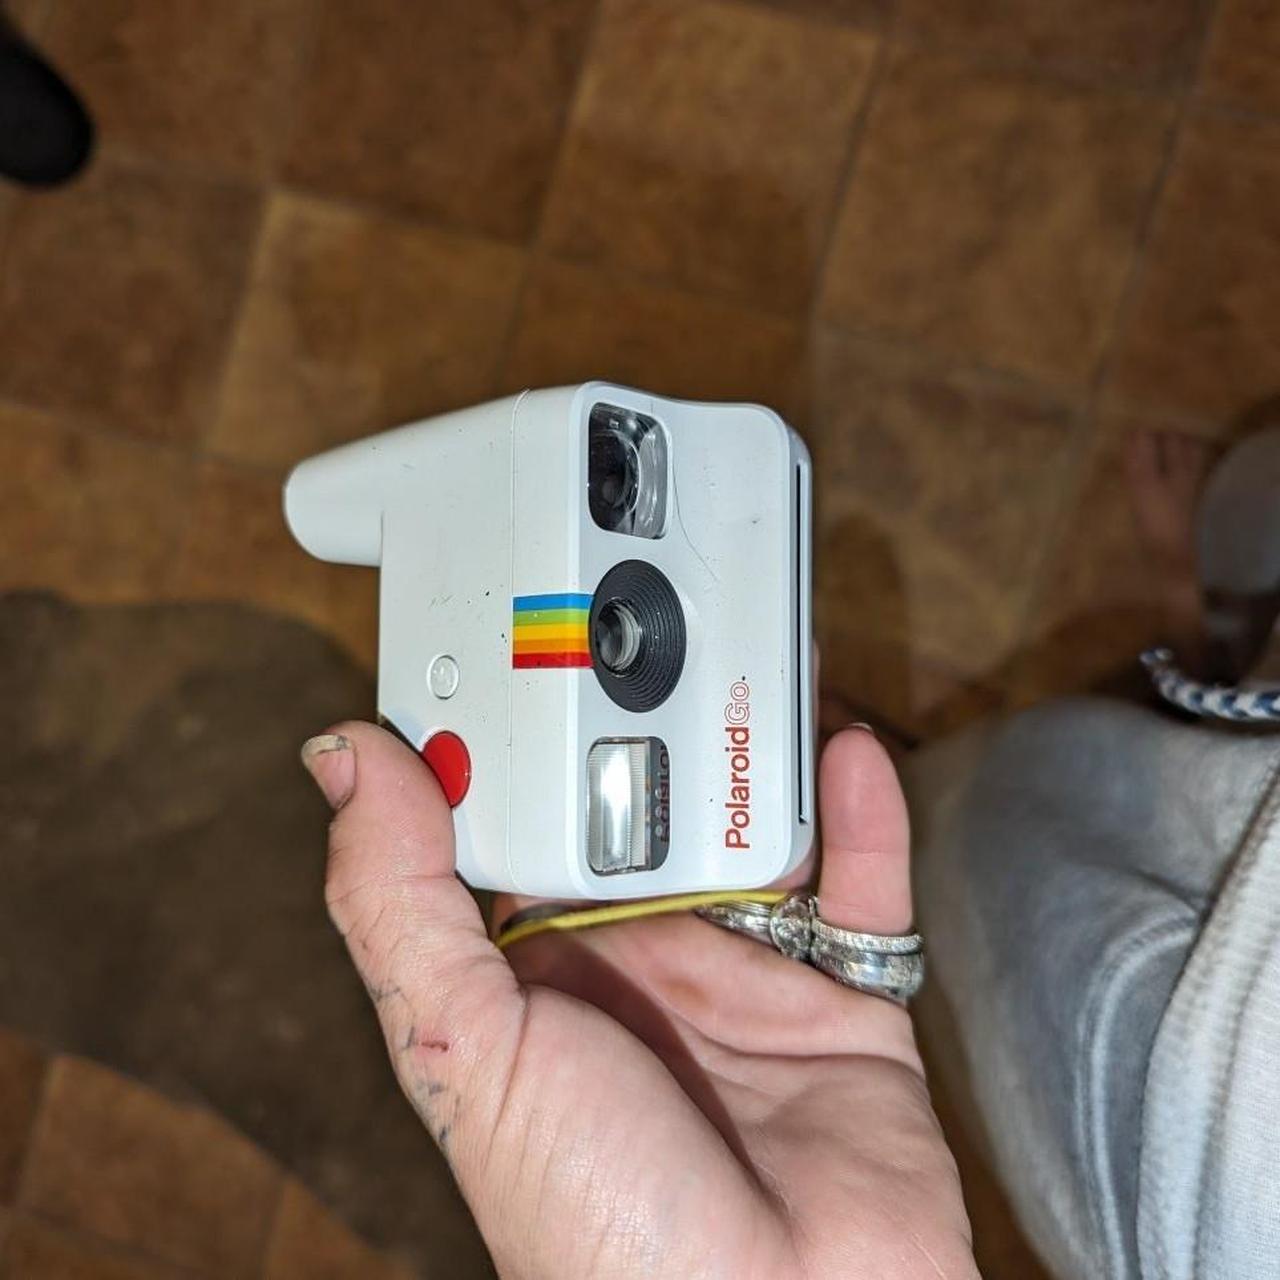 Polaroid Go Camera White